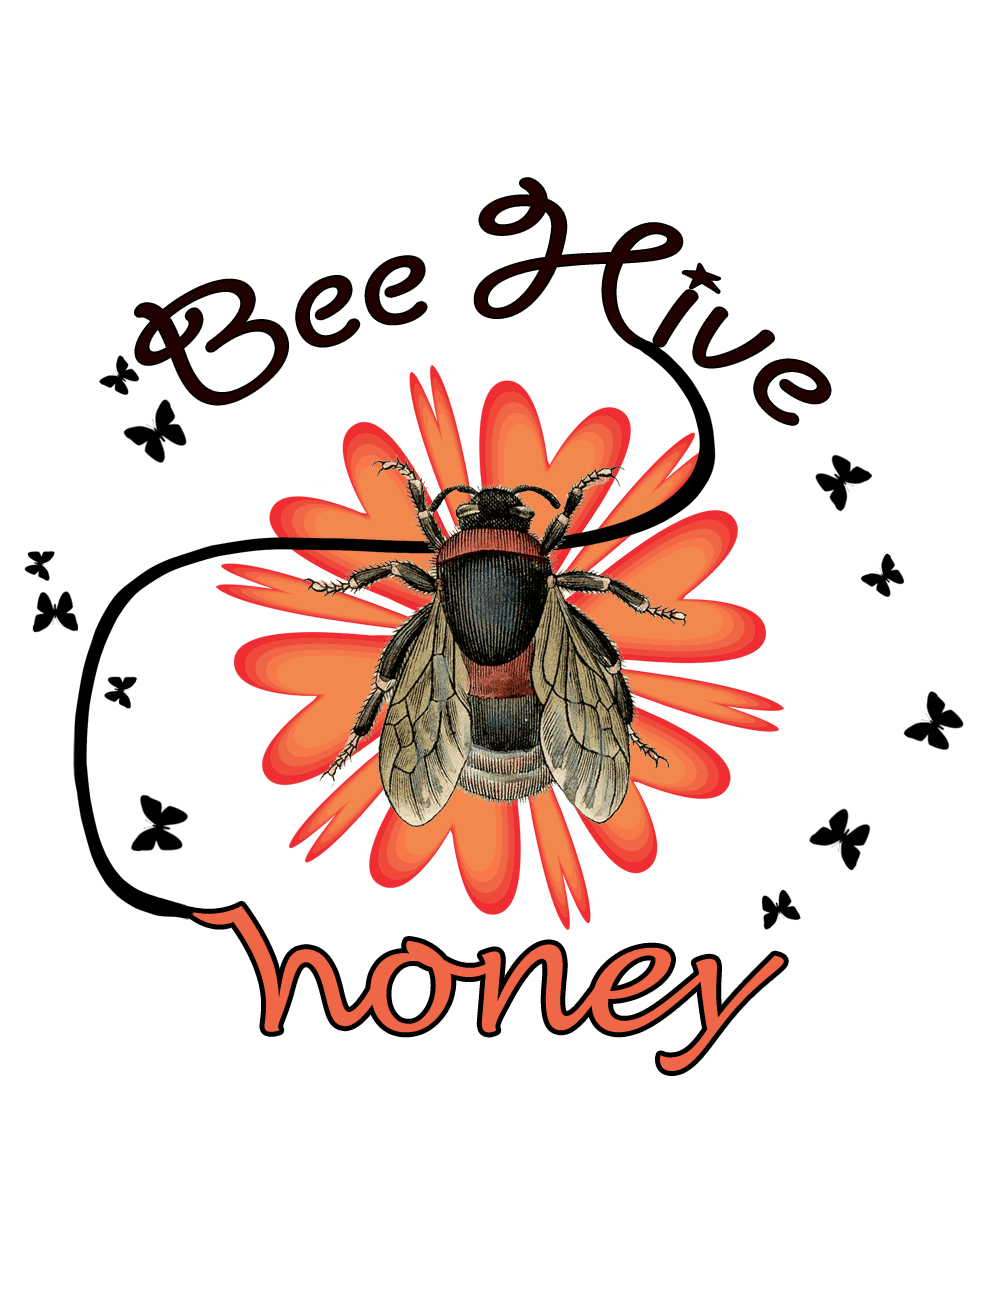 Beehive honey illustration